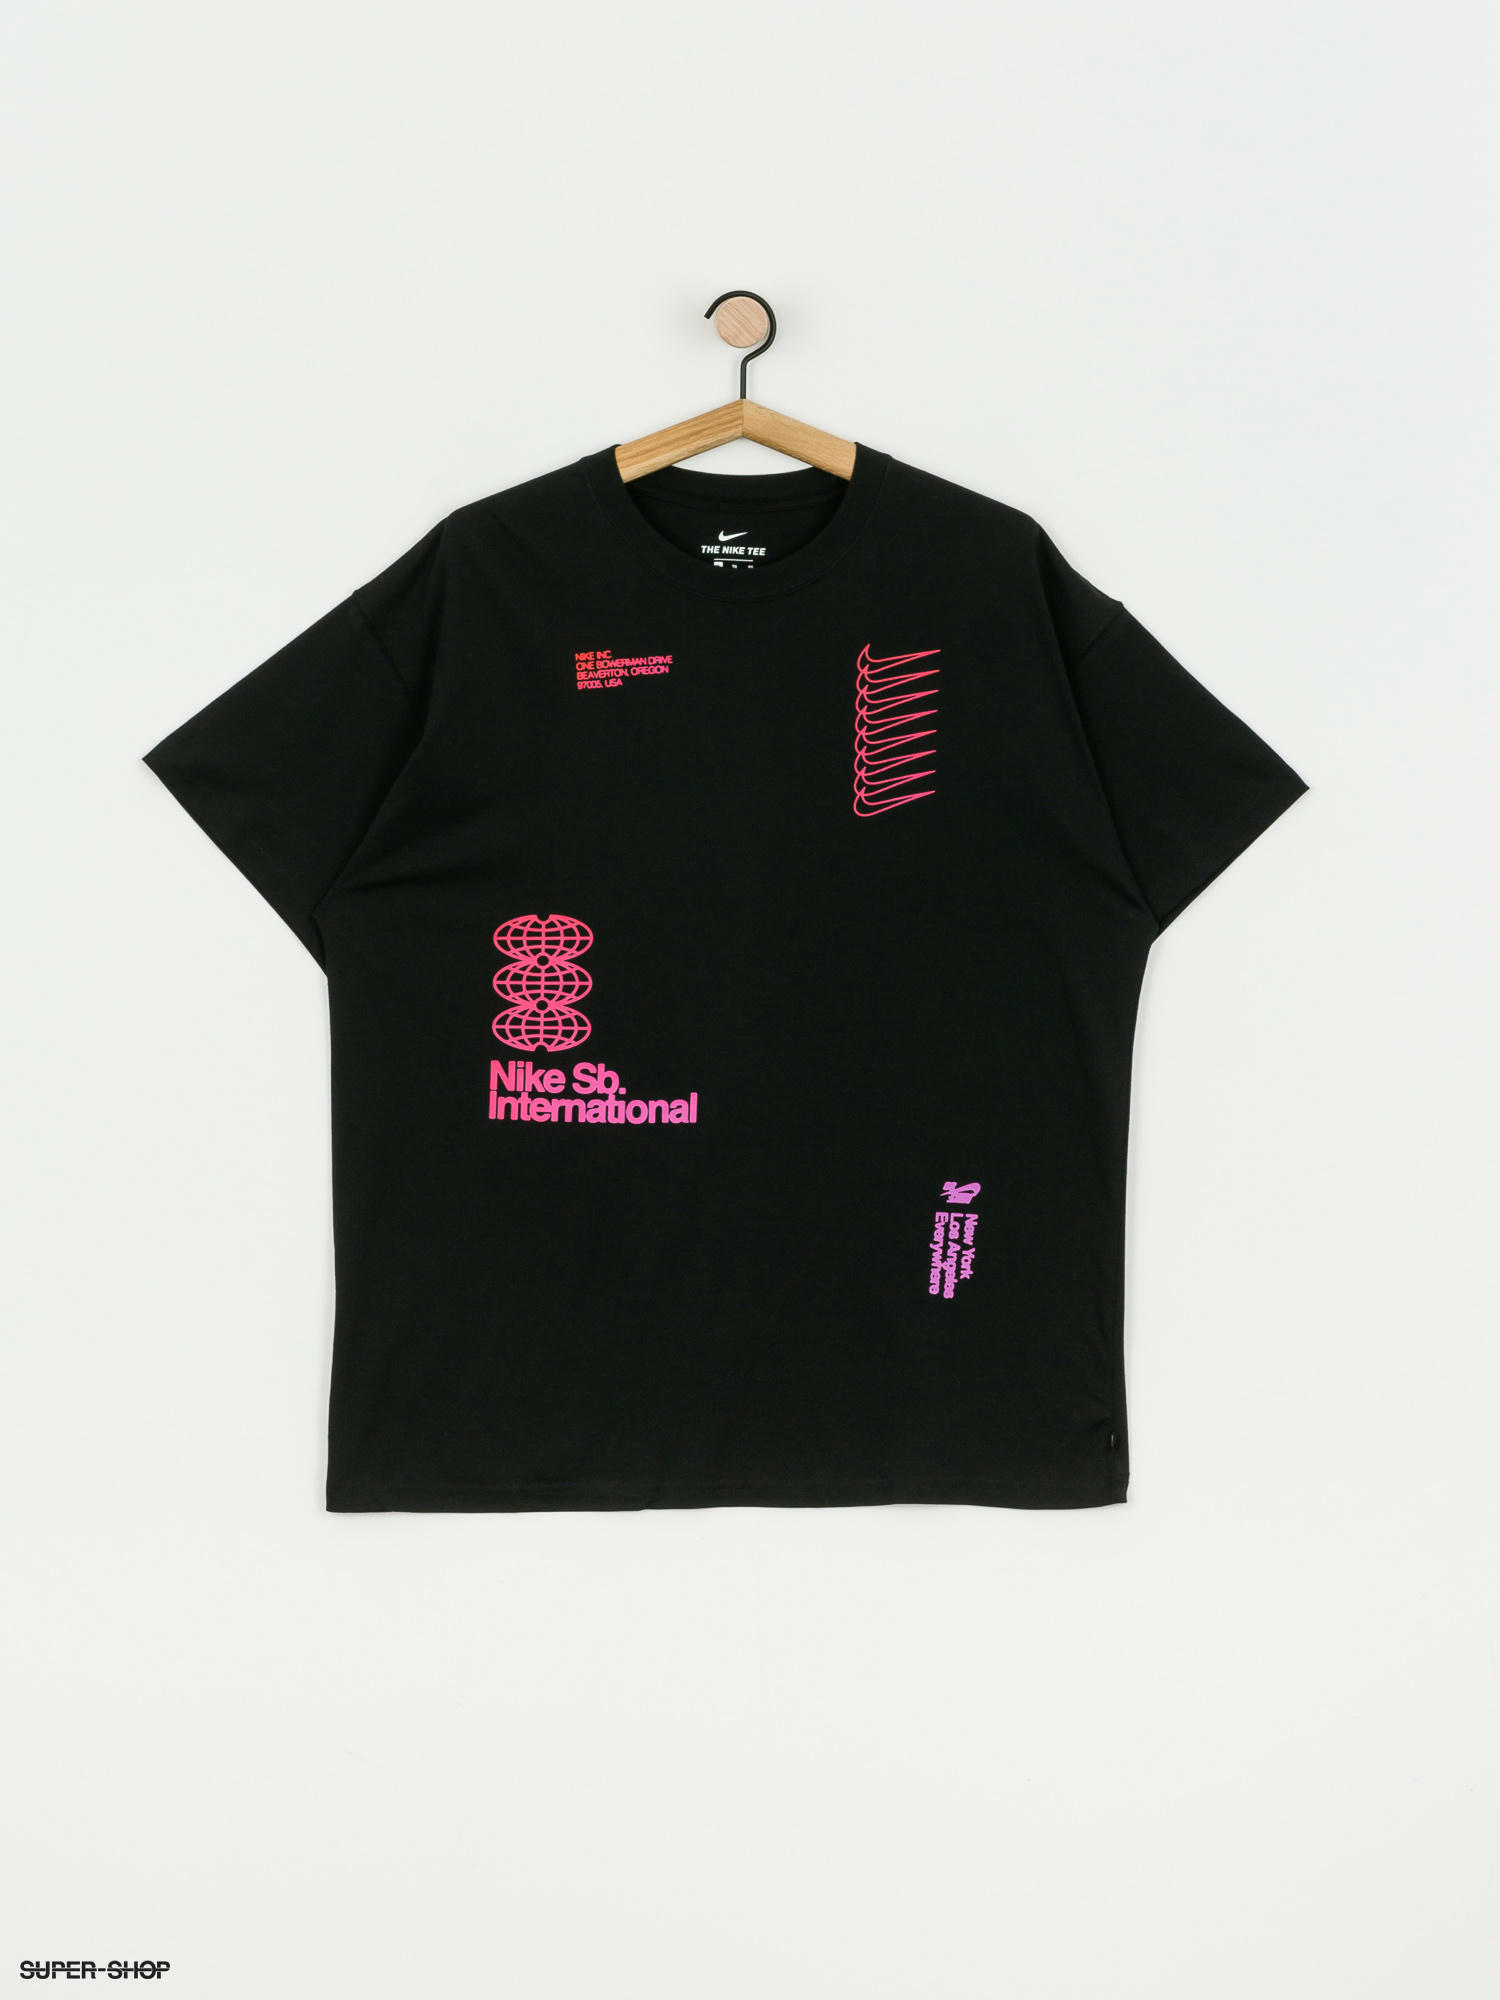 Nike SB International T-shirt (black)